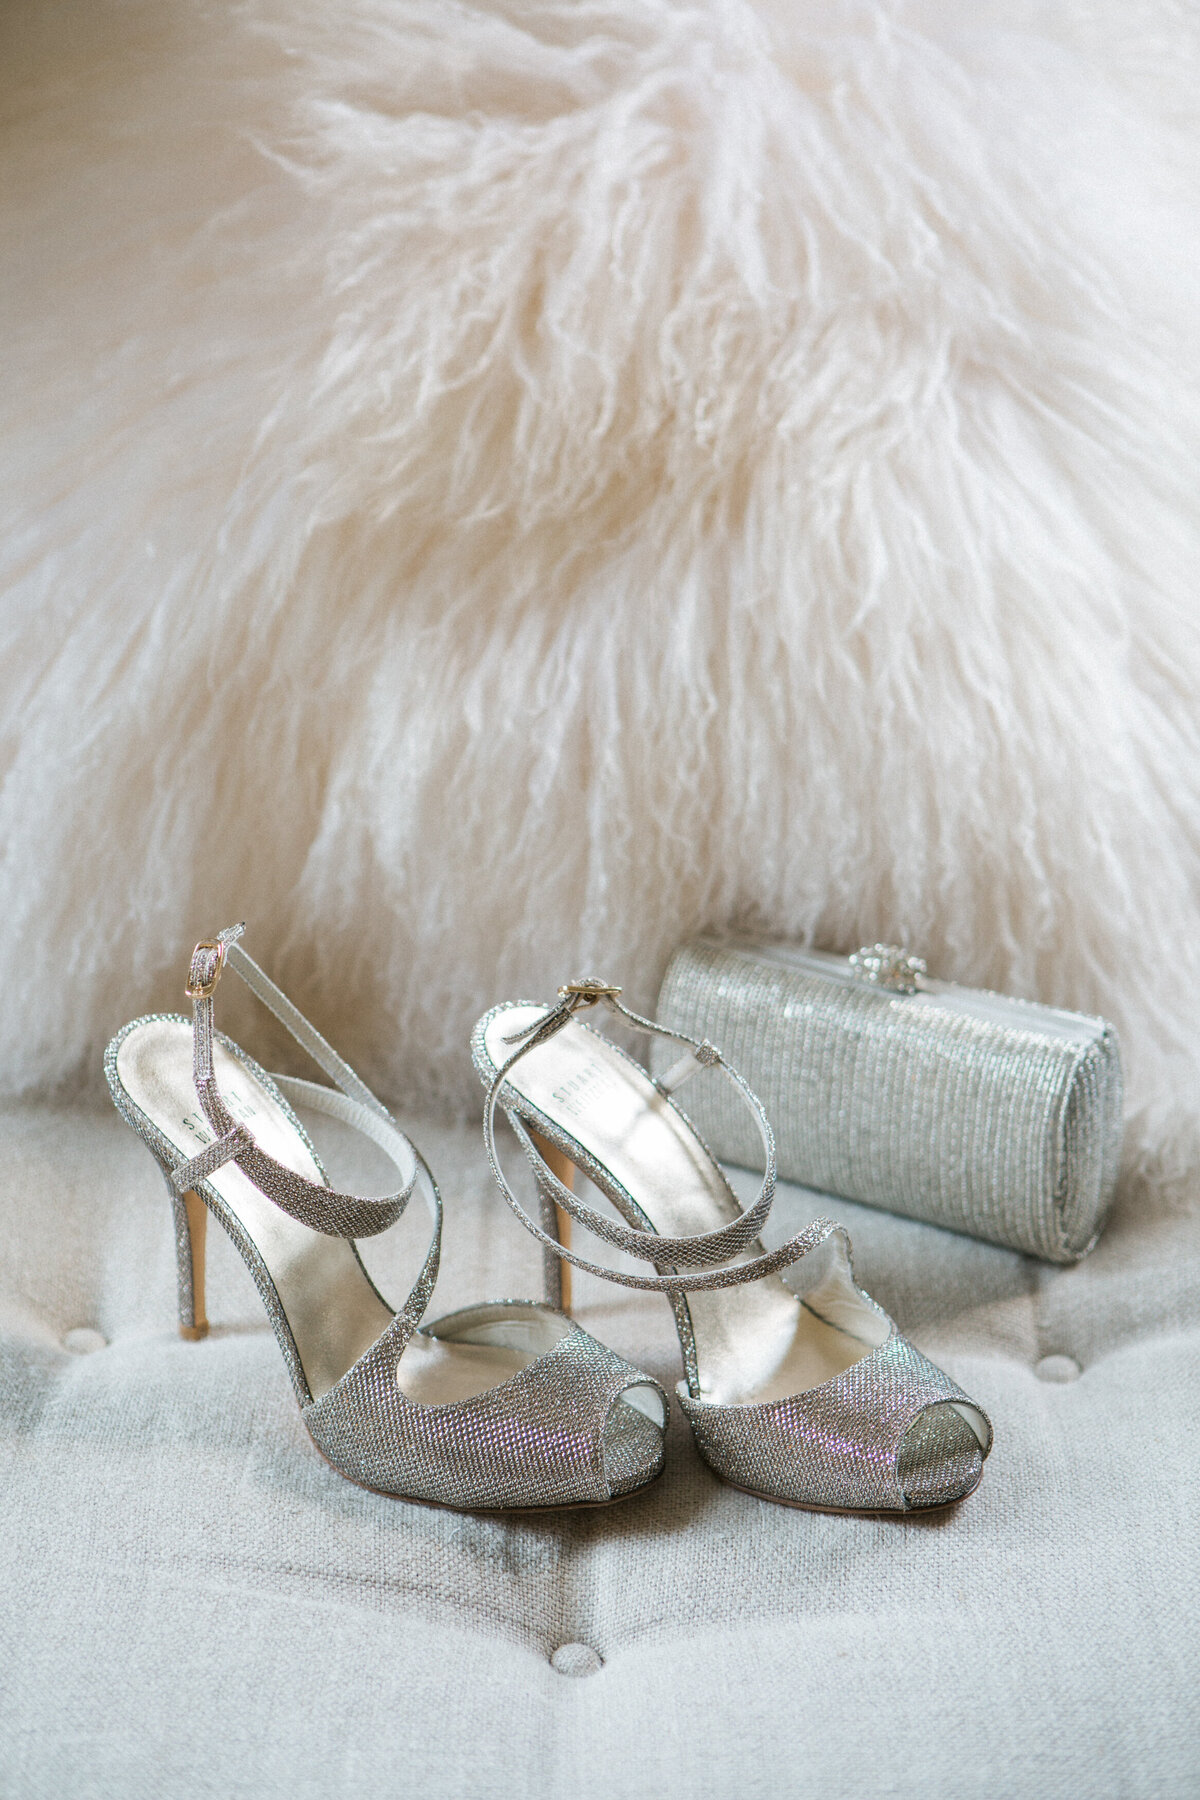 estate-wedding-silver-bridal-accessories-shoes